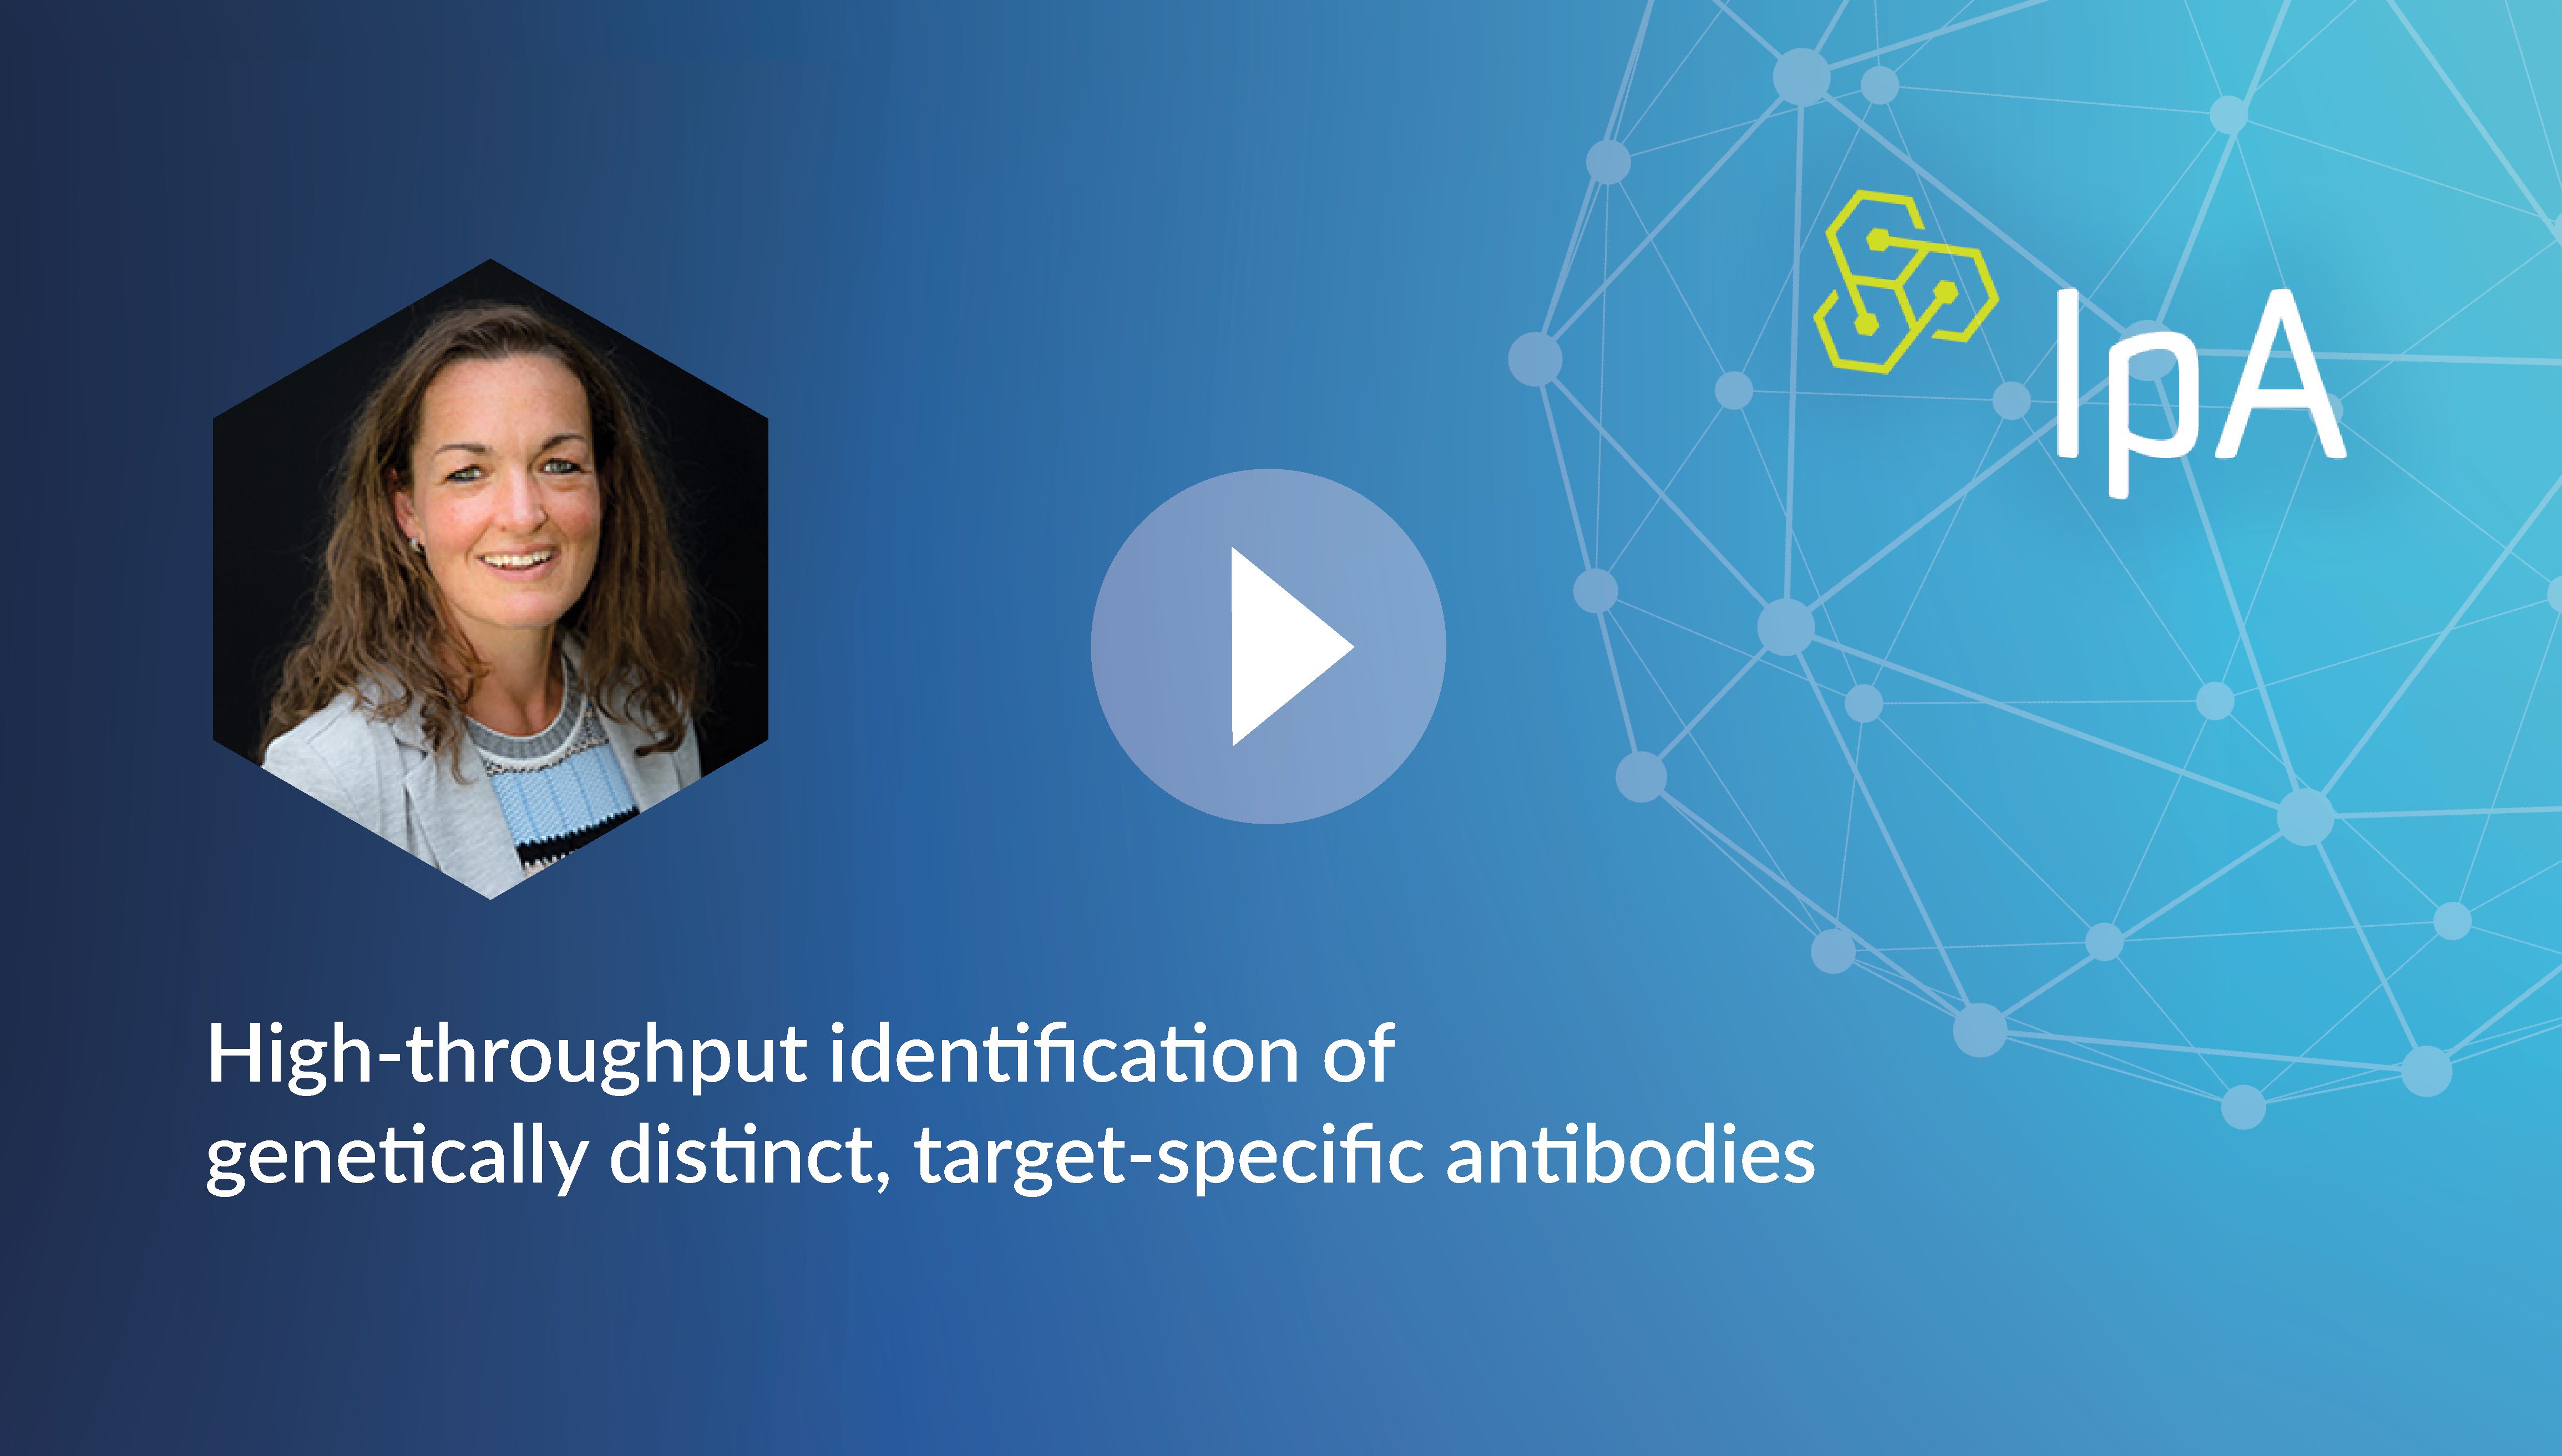 High-throughput identification of genetically distinct, target-specific antibodies